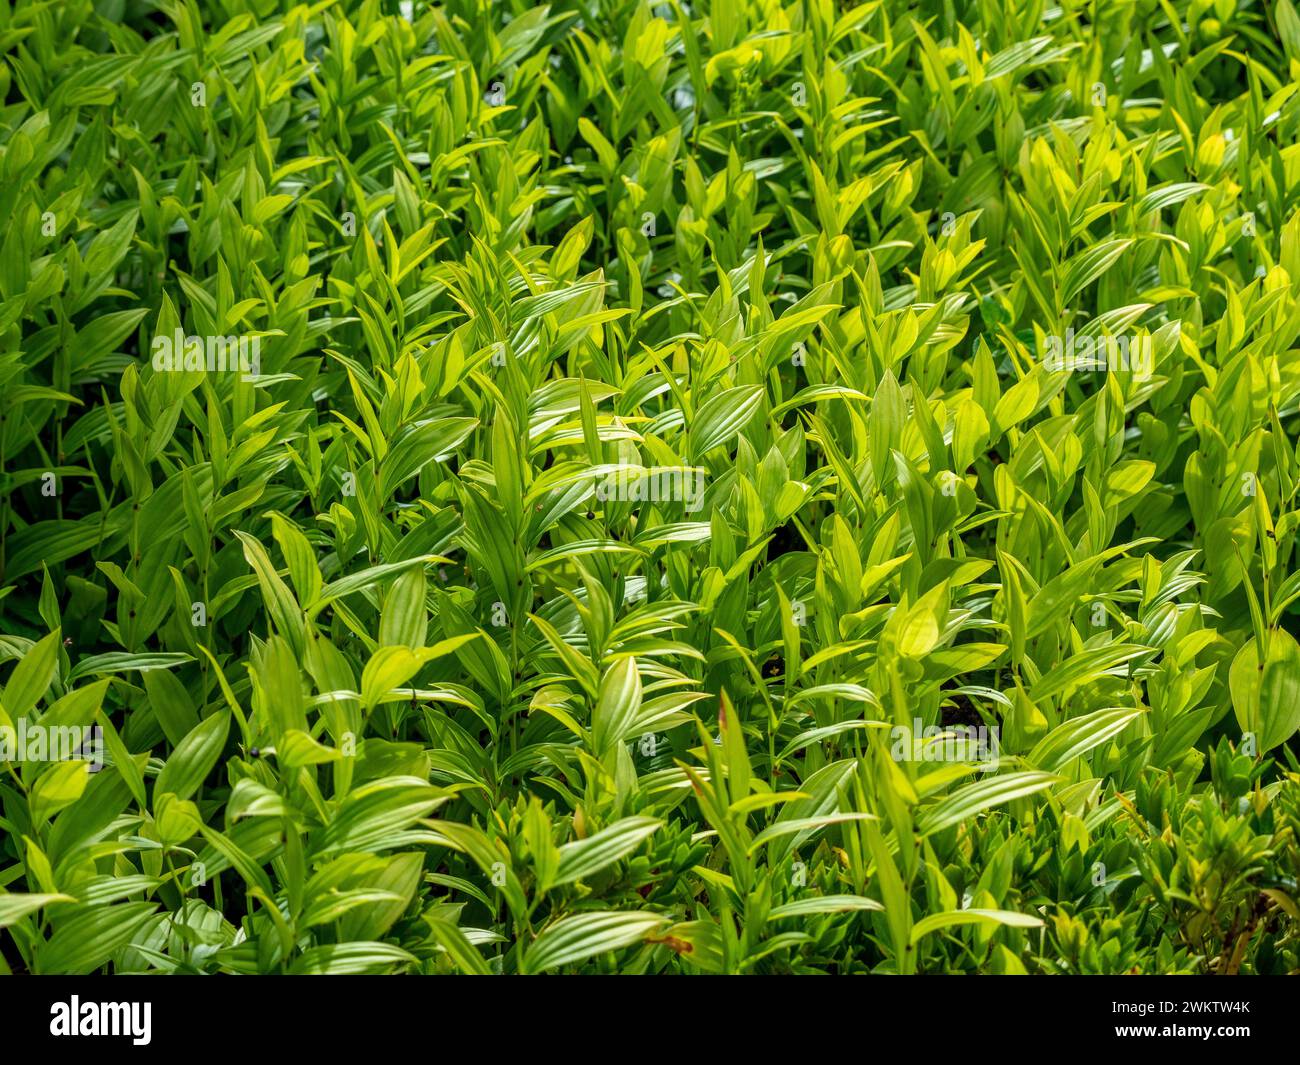 Lush green leaves of Disporum viridescens (common name Asian fairy bells) growing in a garden. Stock Photo